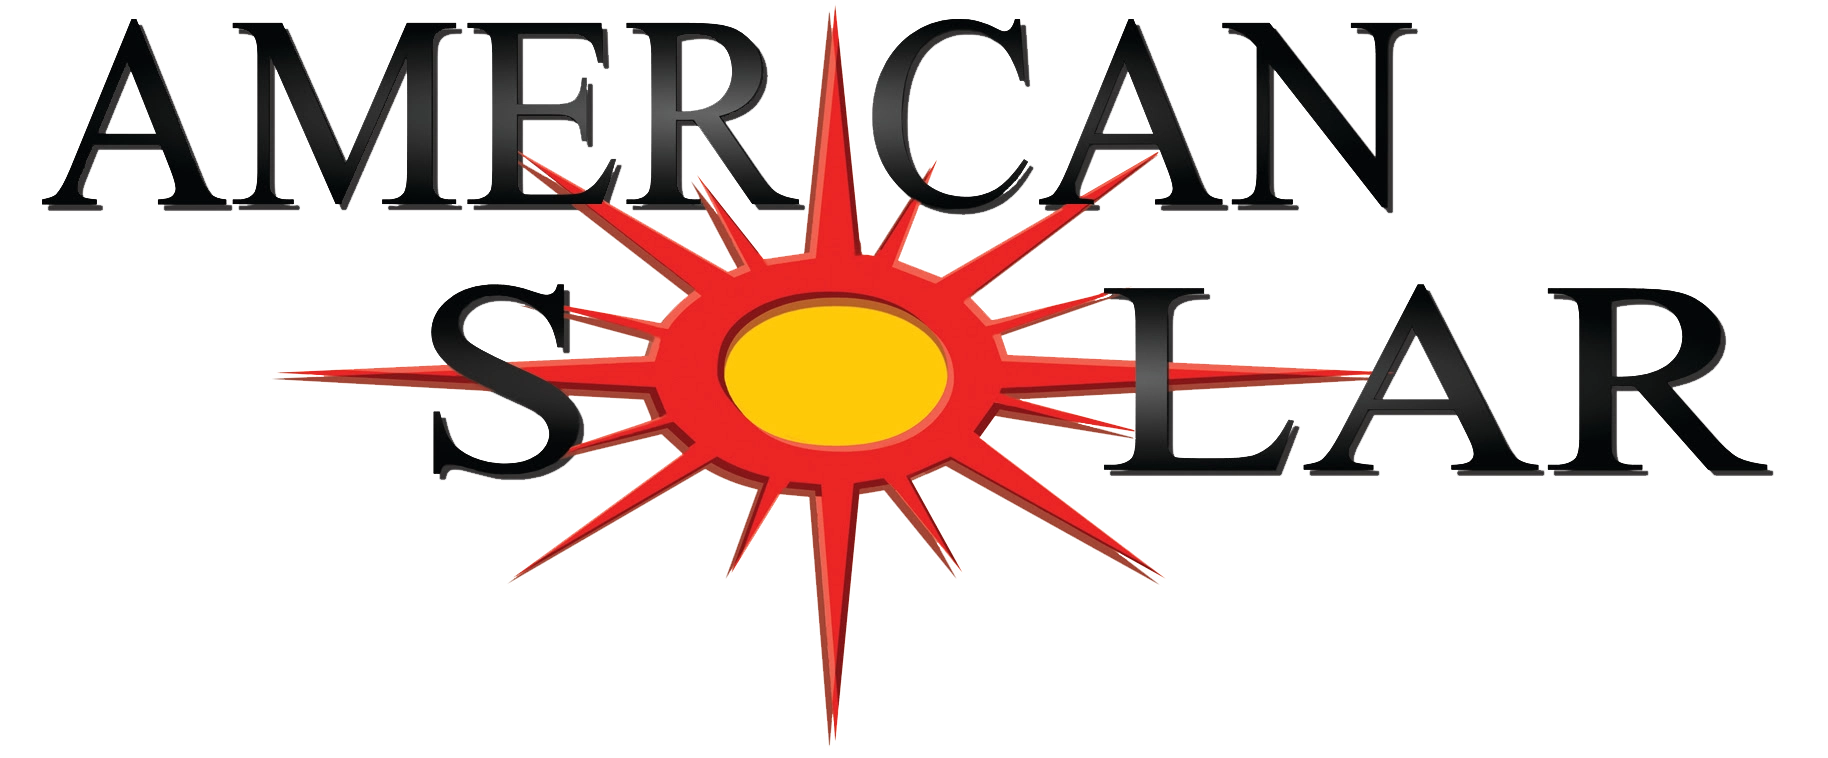 American Solar Enterprises LLC Logo